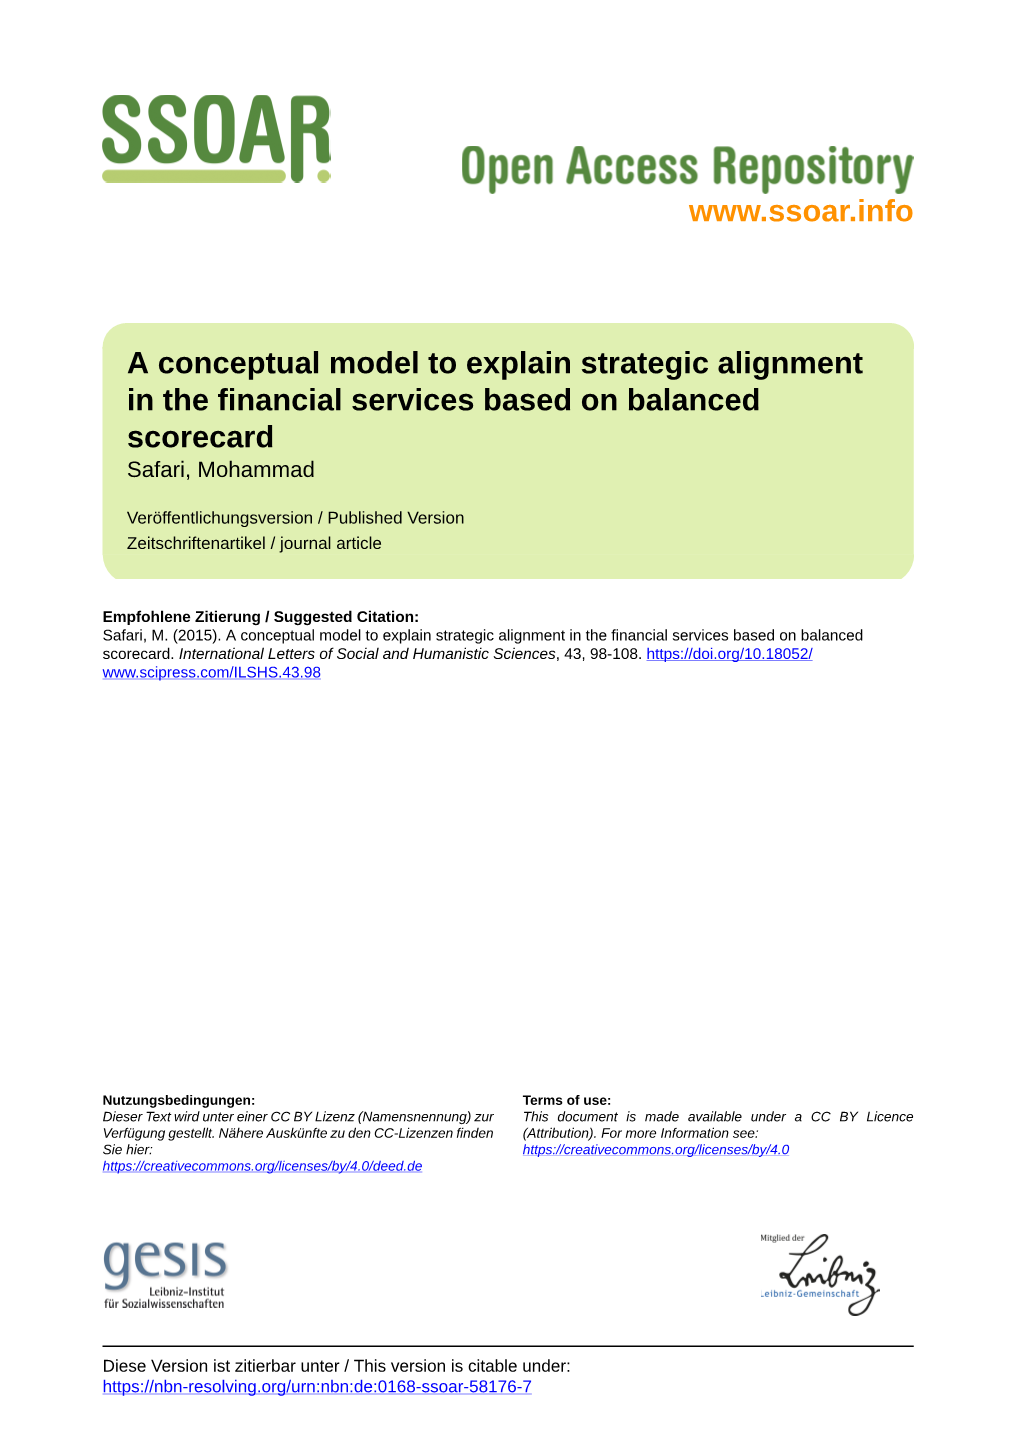 A Conceptual Model to Explain Strategic Alignment in the Financial Services Based on Balanced Scorecard Safari, Mohammad